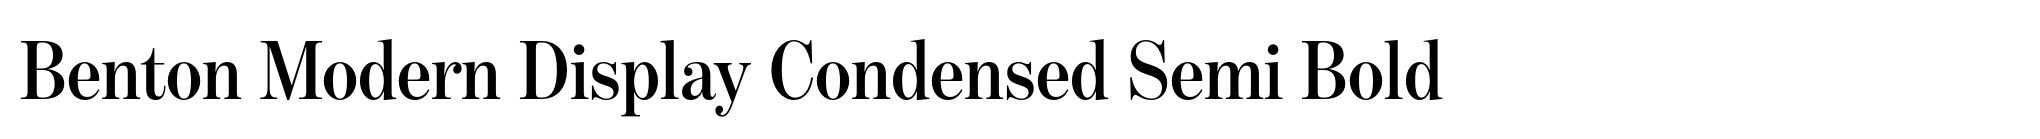 Benton Modern Display Condensed Semi Bold image